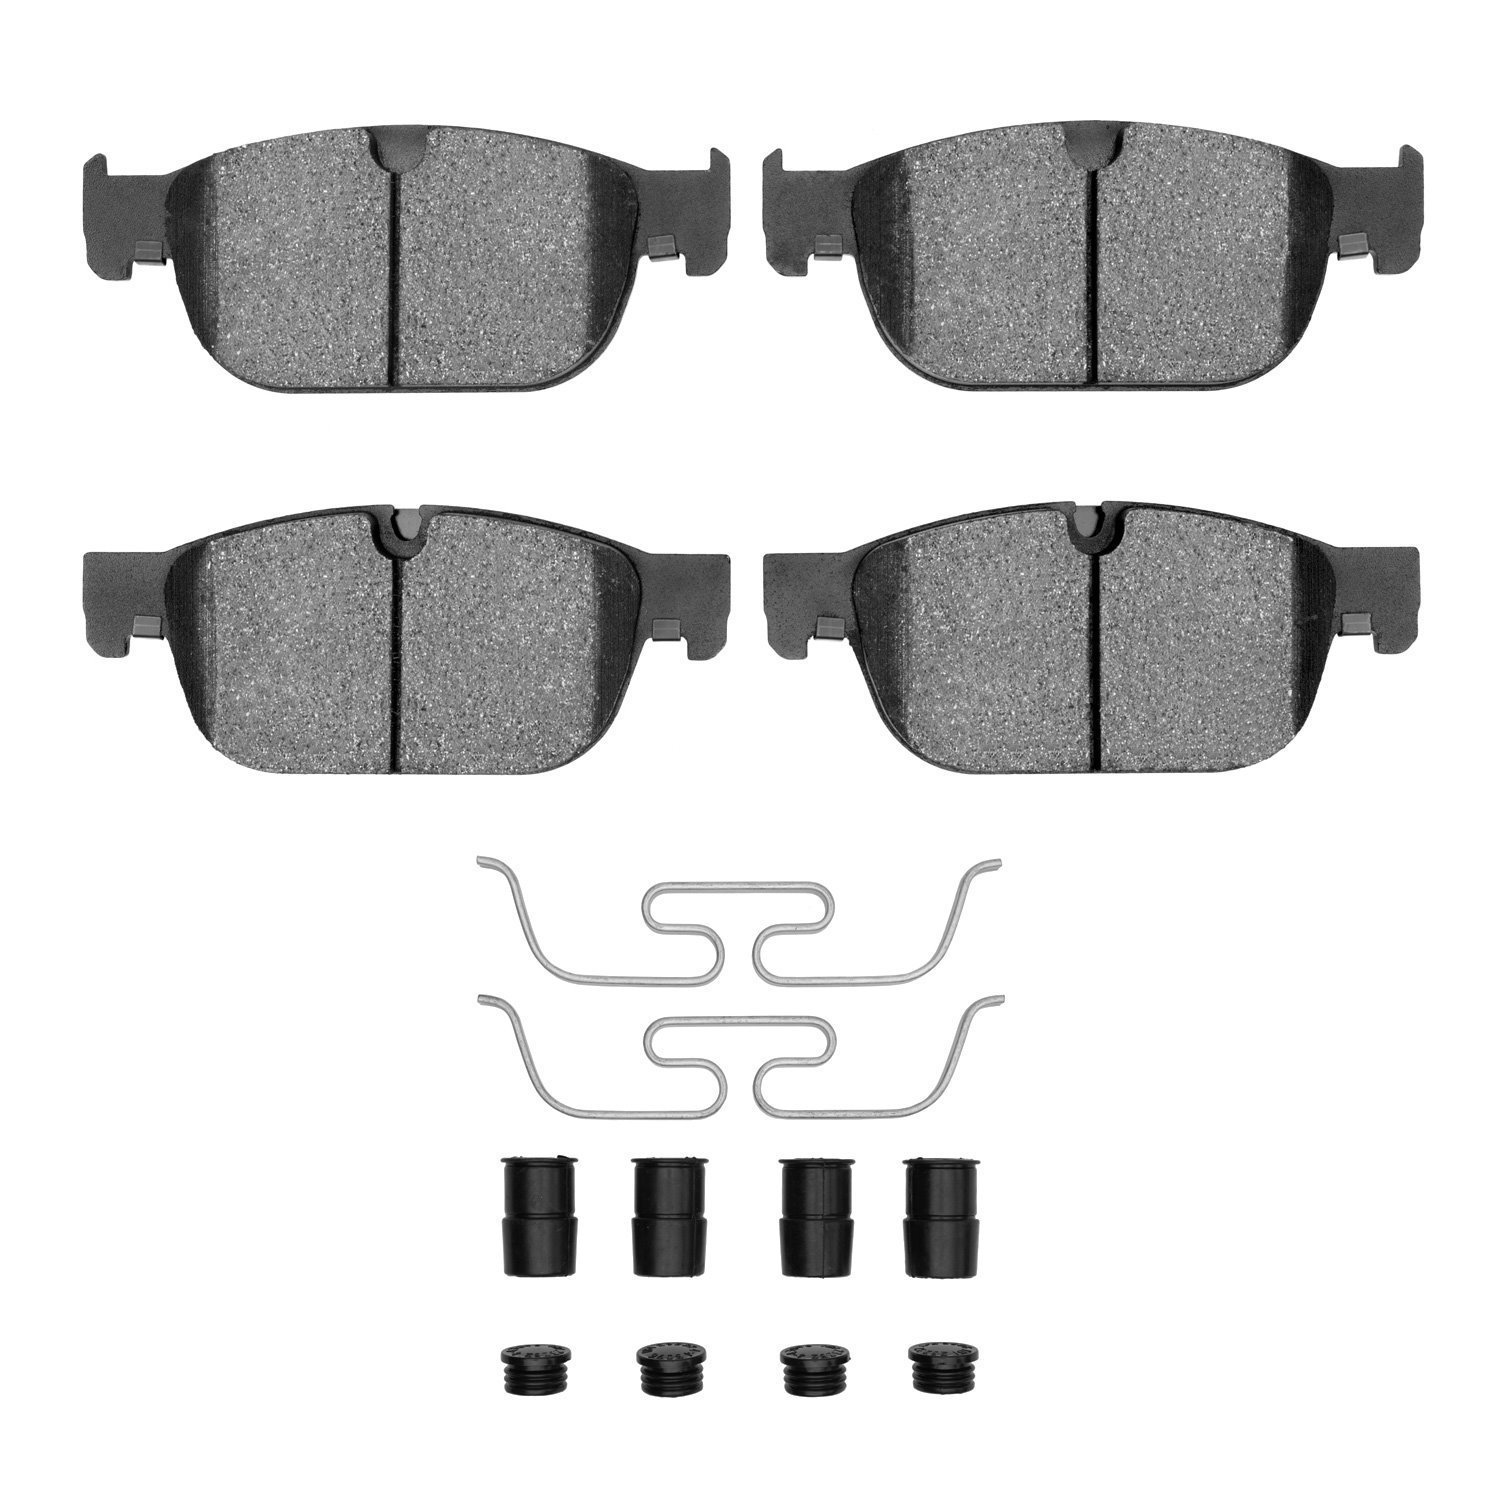 1600-1865-01 5000 Euro Ceramic Brake Pads & Hardware Kit, Fits Select Multiple Makes/Models, Position: Front